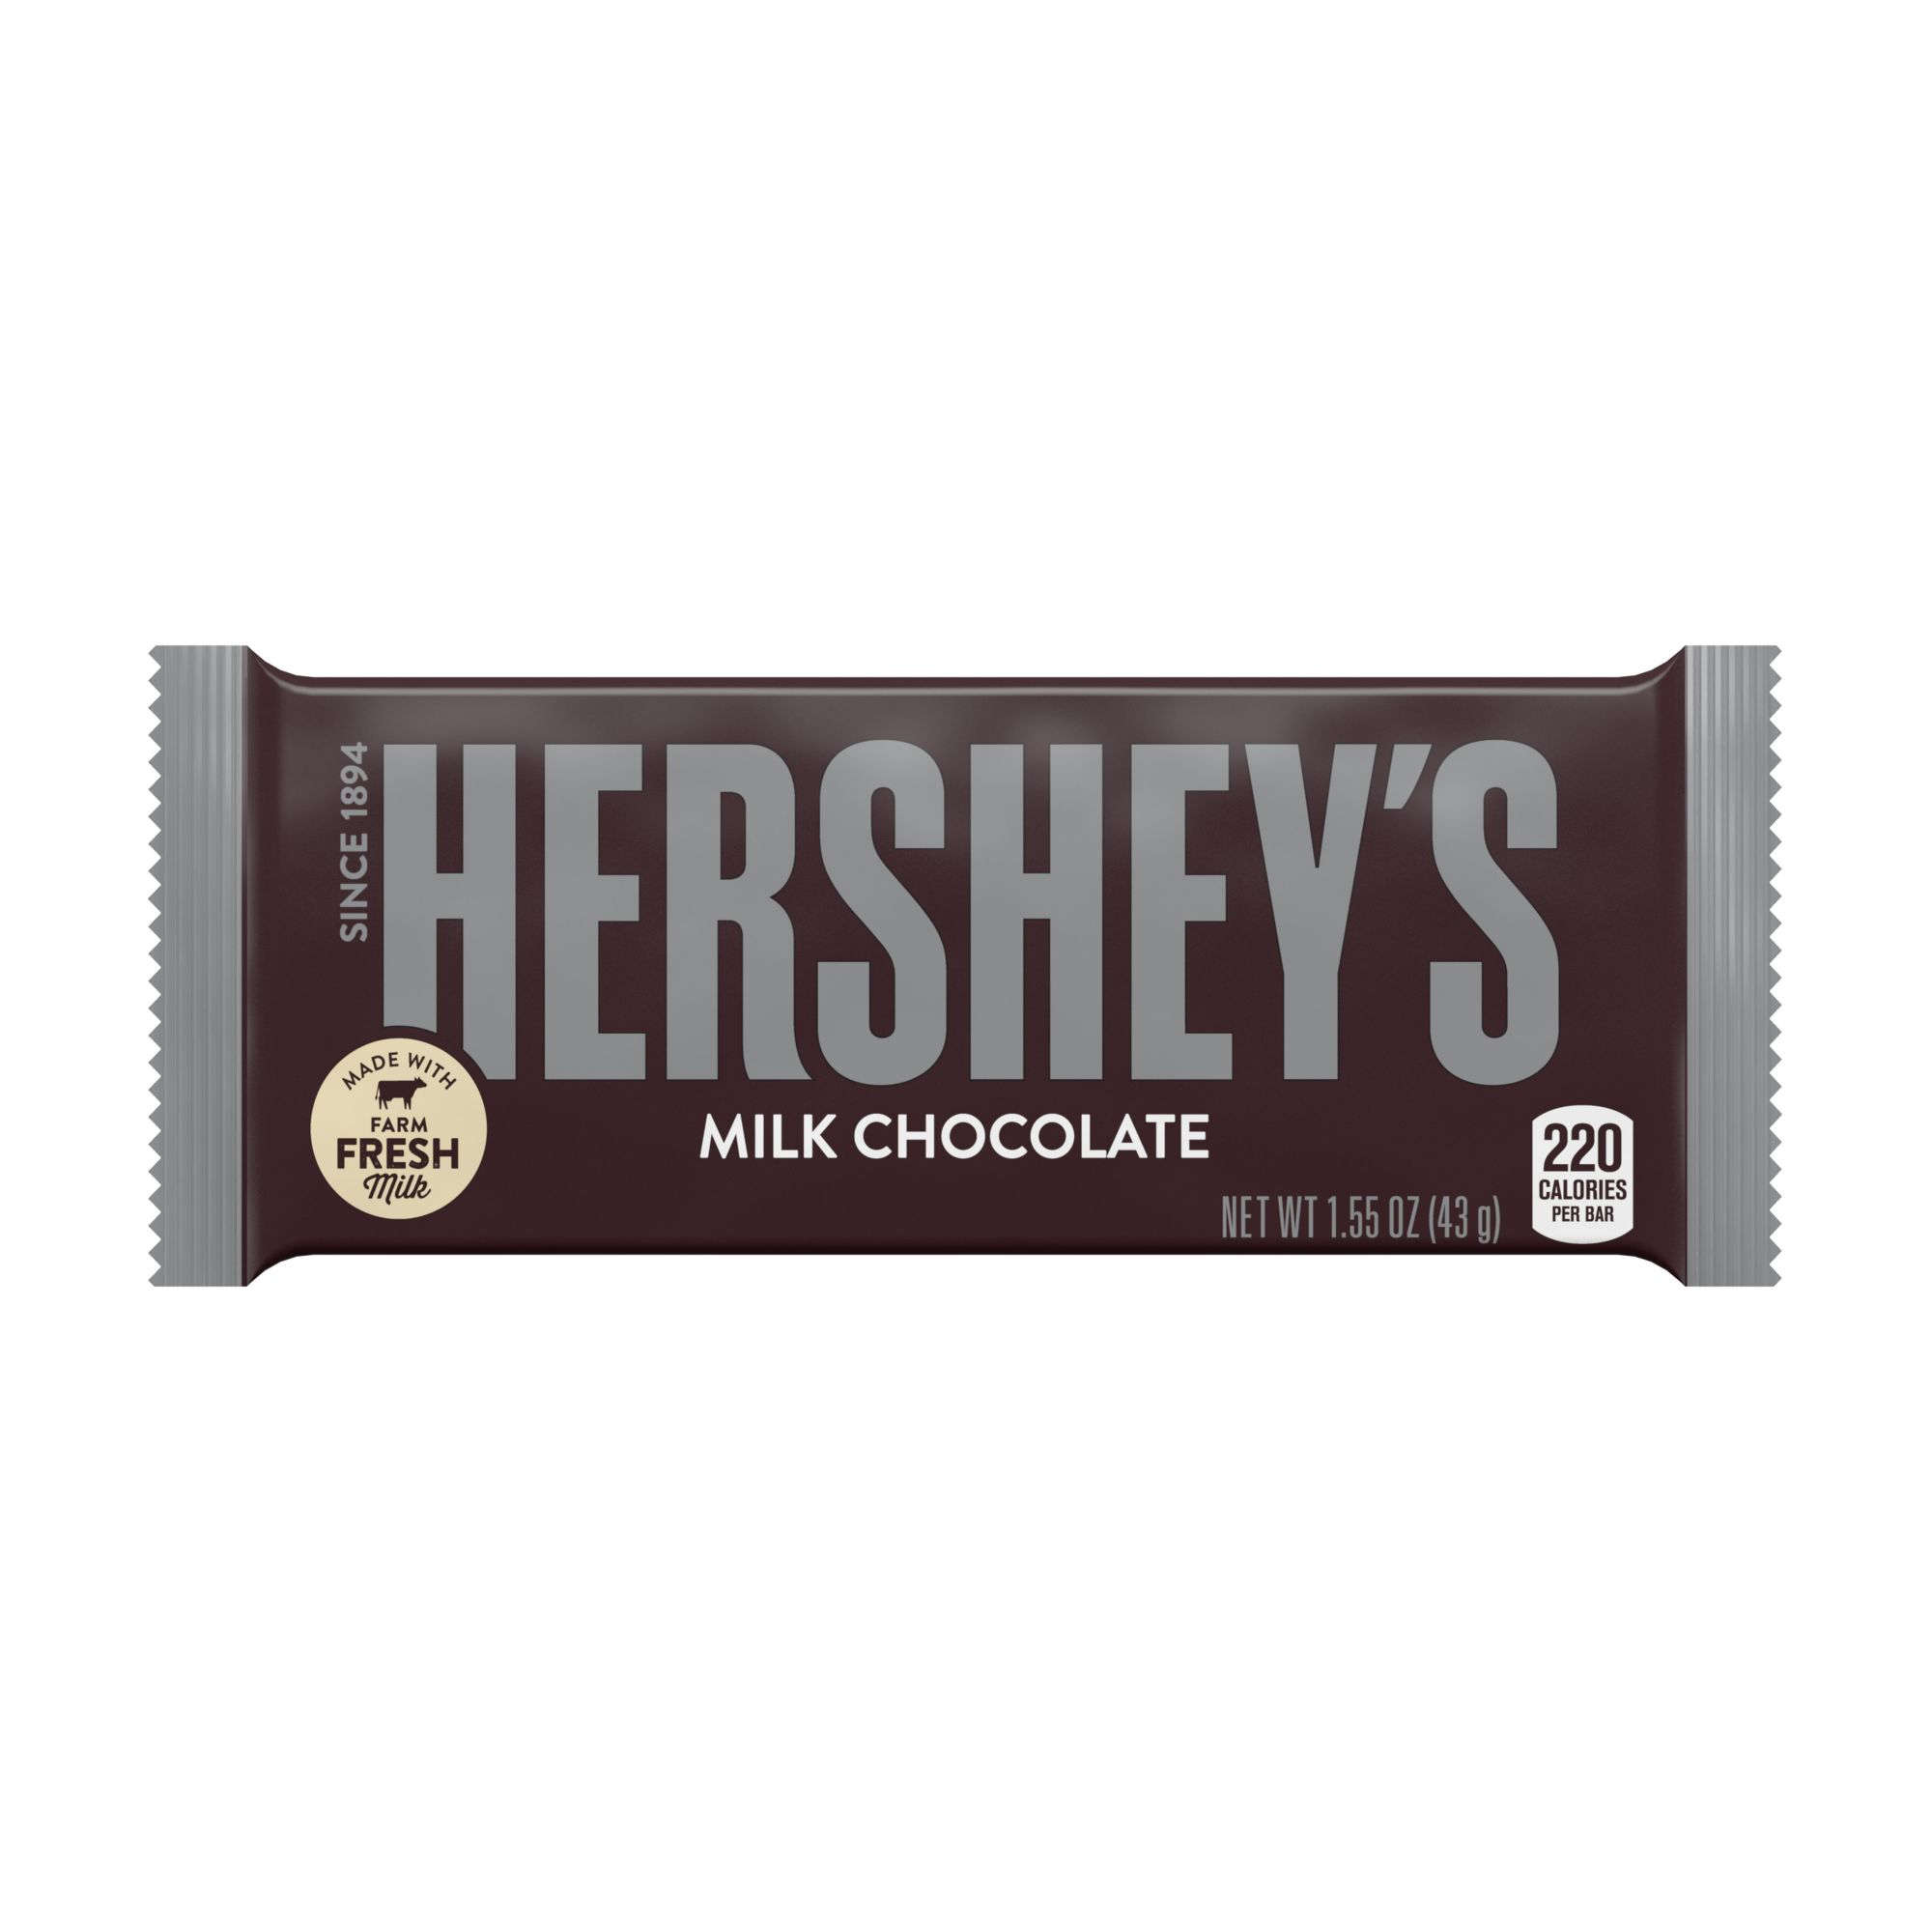 HERSHEY'S Milk Chocolate Candy Bar, 1.55 oz